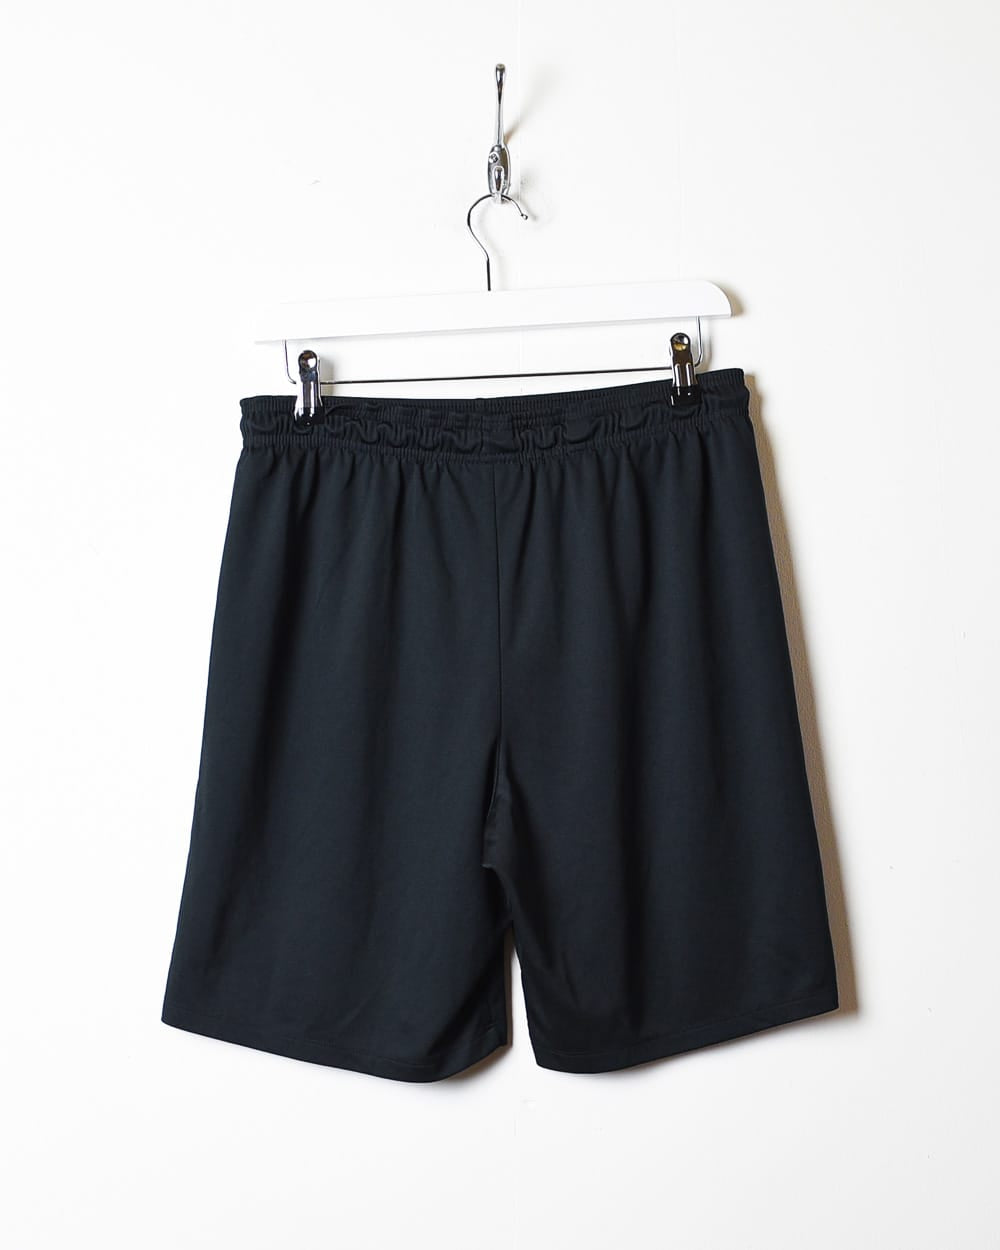 Nike Dri-Fit Throwback Shorts. New. Mens Size: Medium